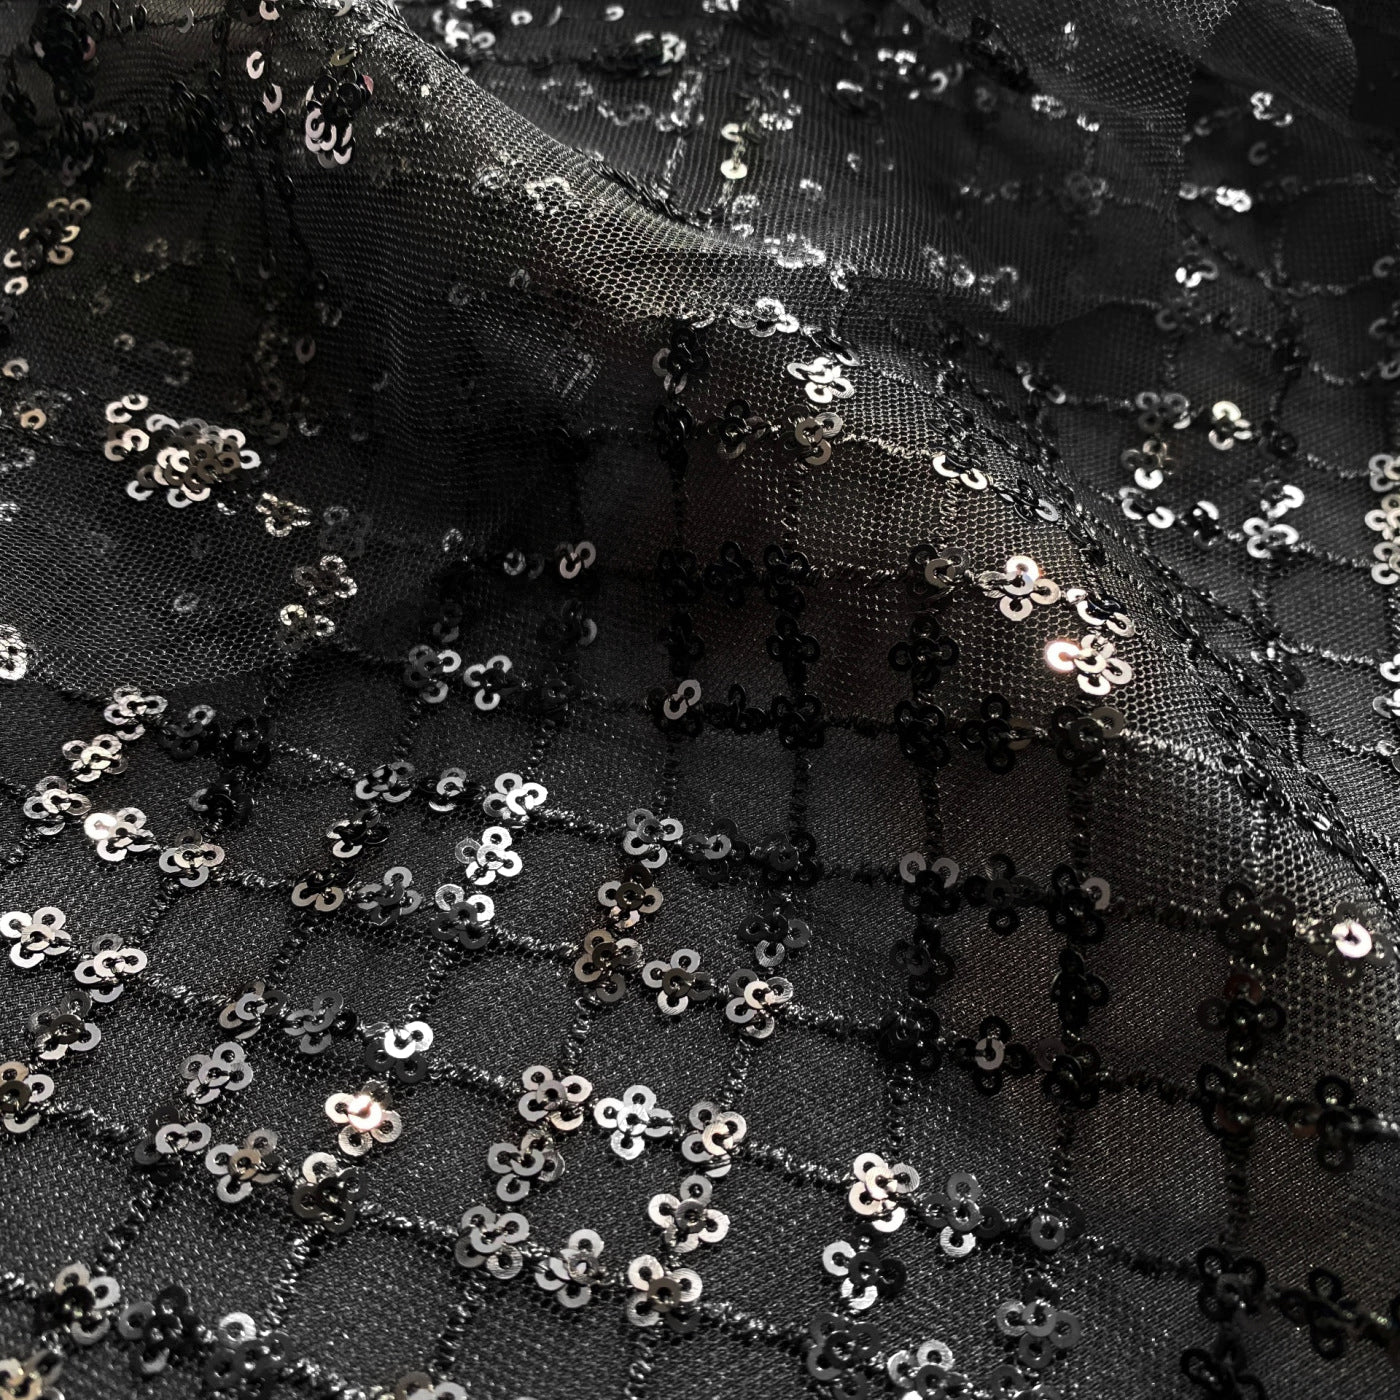 Black Grid Sequin Tiered Midi Dress